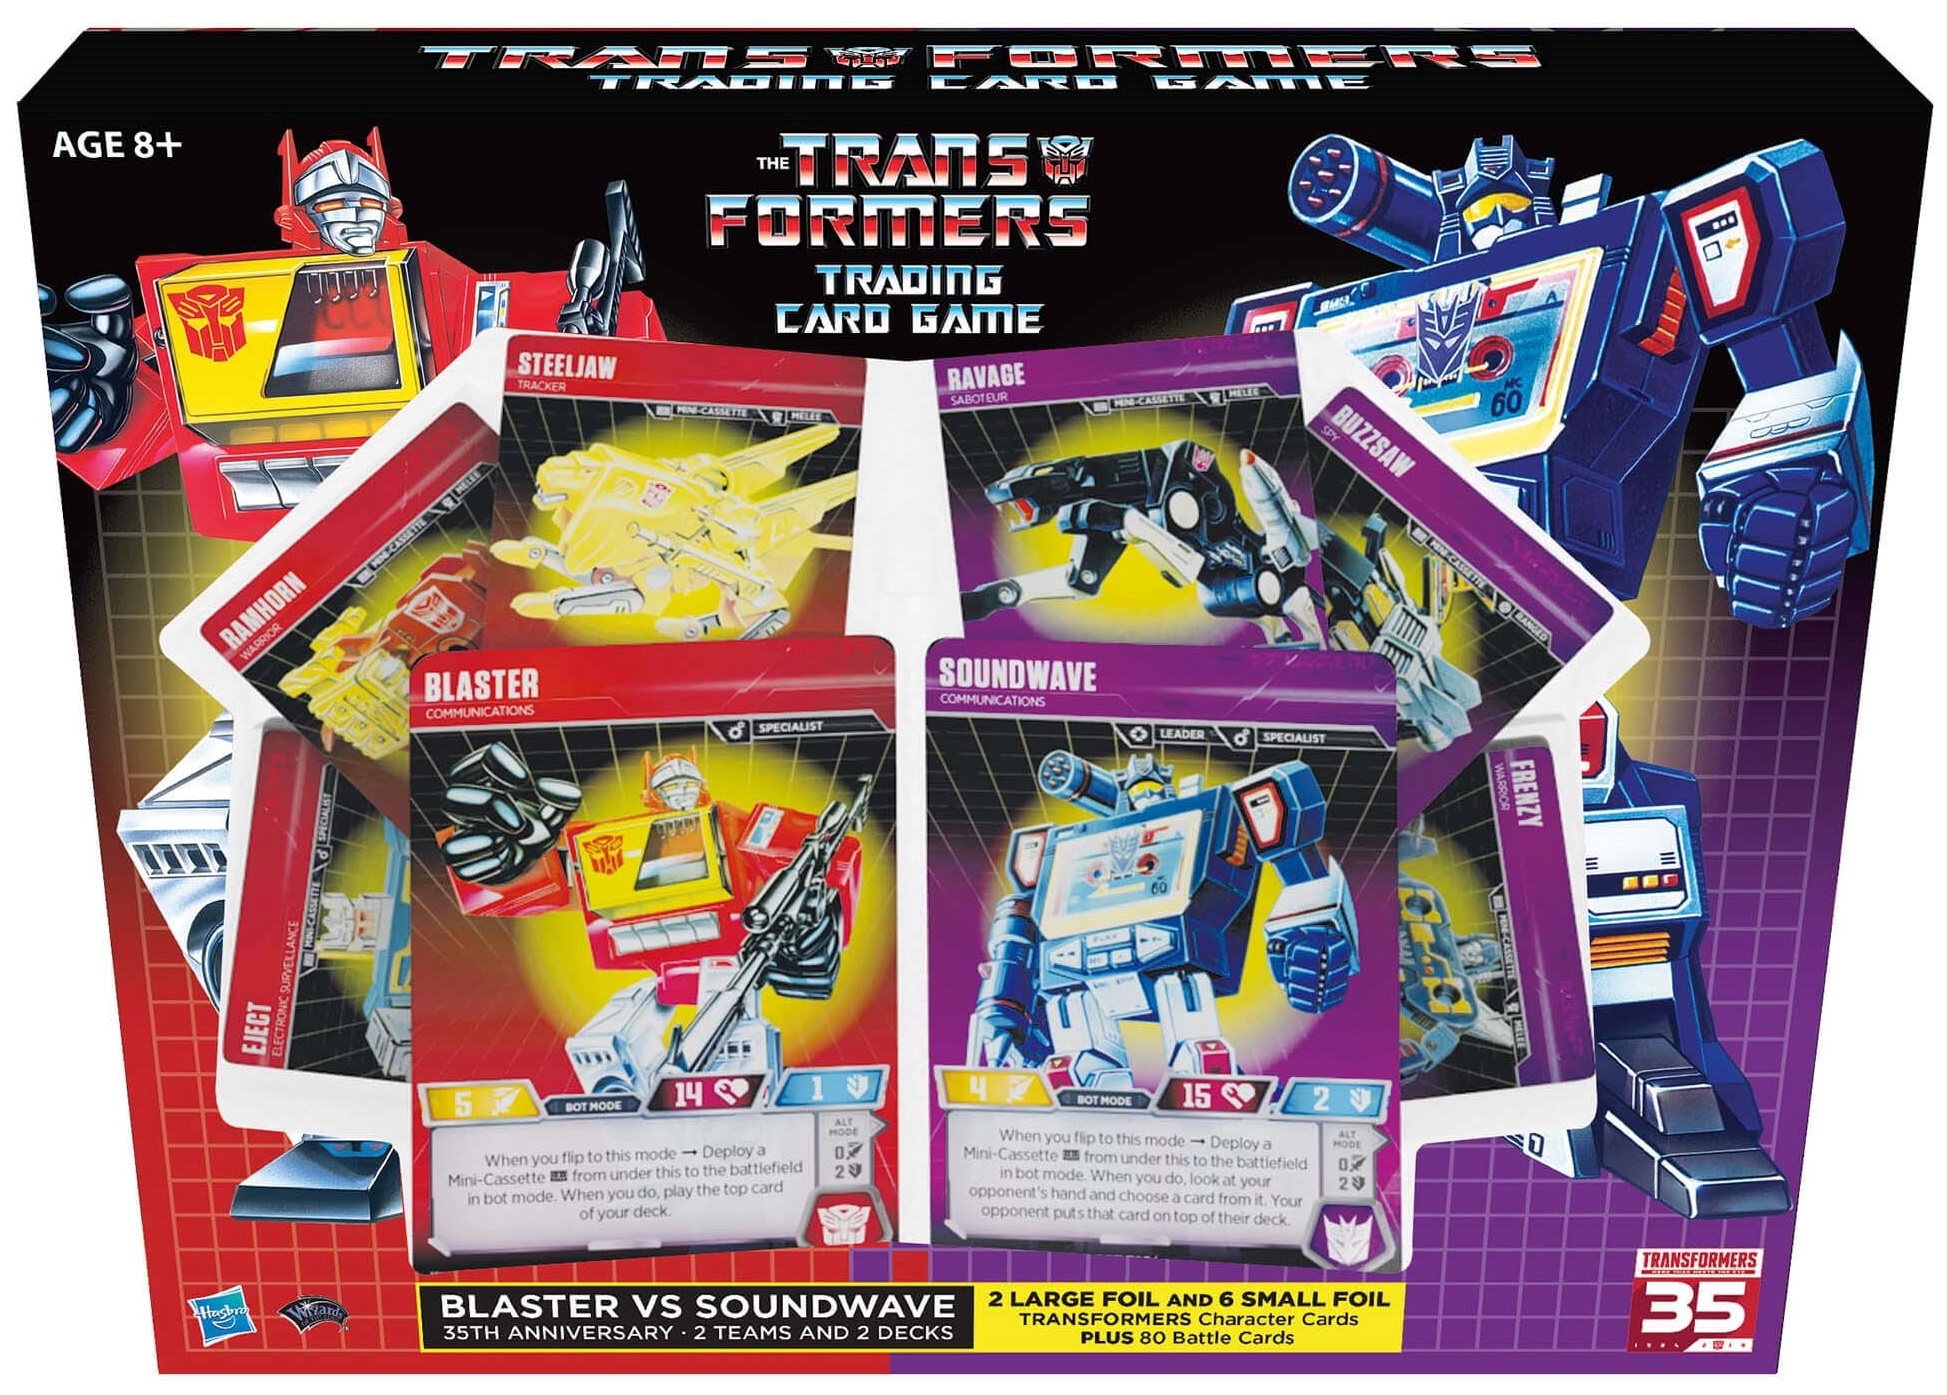 Blaster Vs Soundwave Deck New theme deck Transformers Trading Card Game 